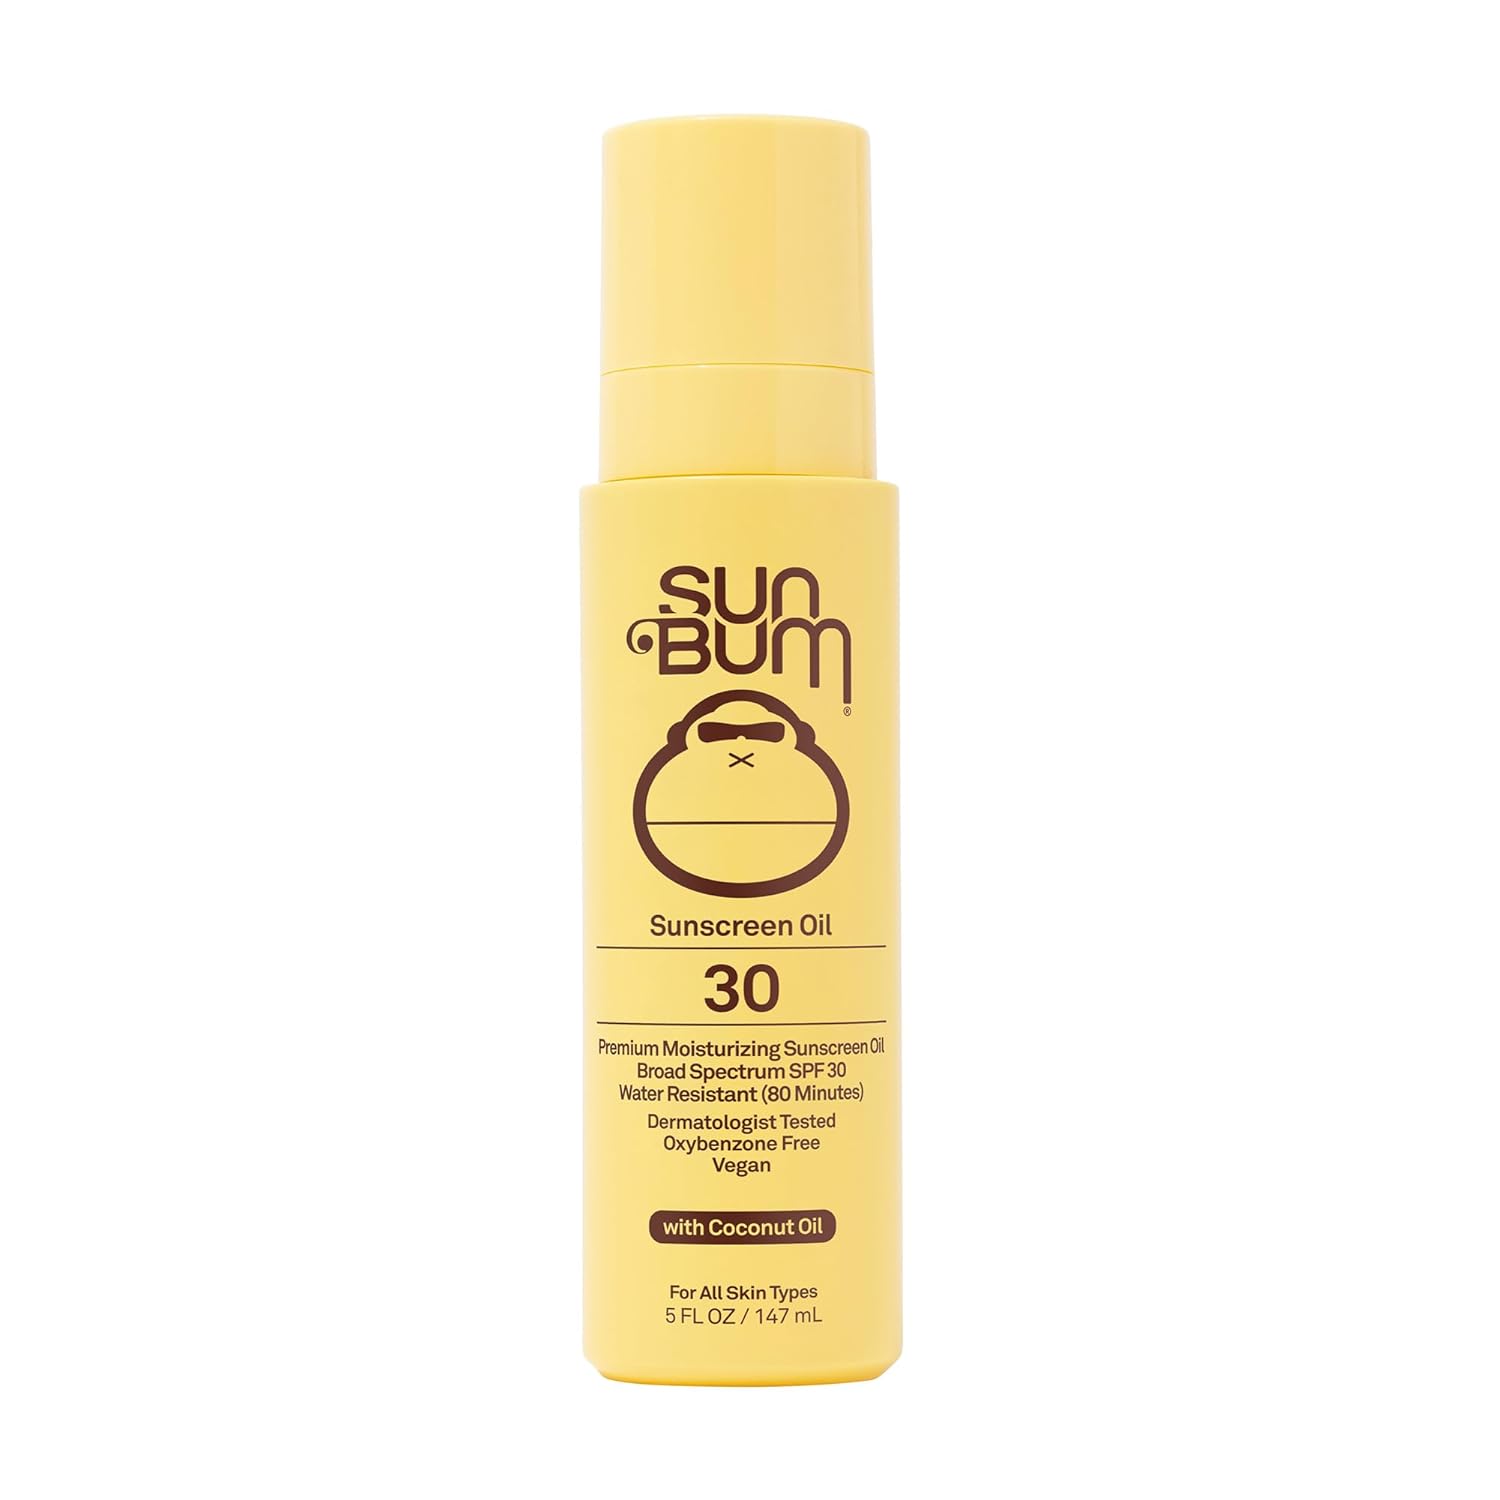 Sun Bum Original SPF 30 Sunscreen Oil | Vegan and Hawaii 104 Reef Act Compliant (Octinoxate & Oxybenzone Free) Broad Spectrum Moisturizing UVA/UVB Glowing Sunscreen Lotion with Vitamin E | 5 oz